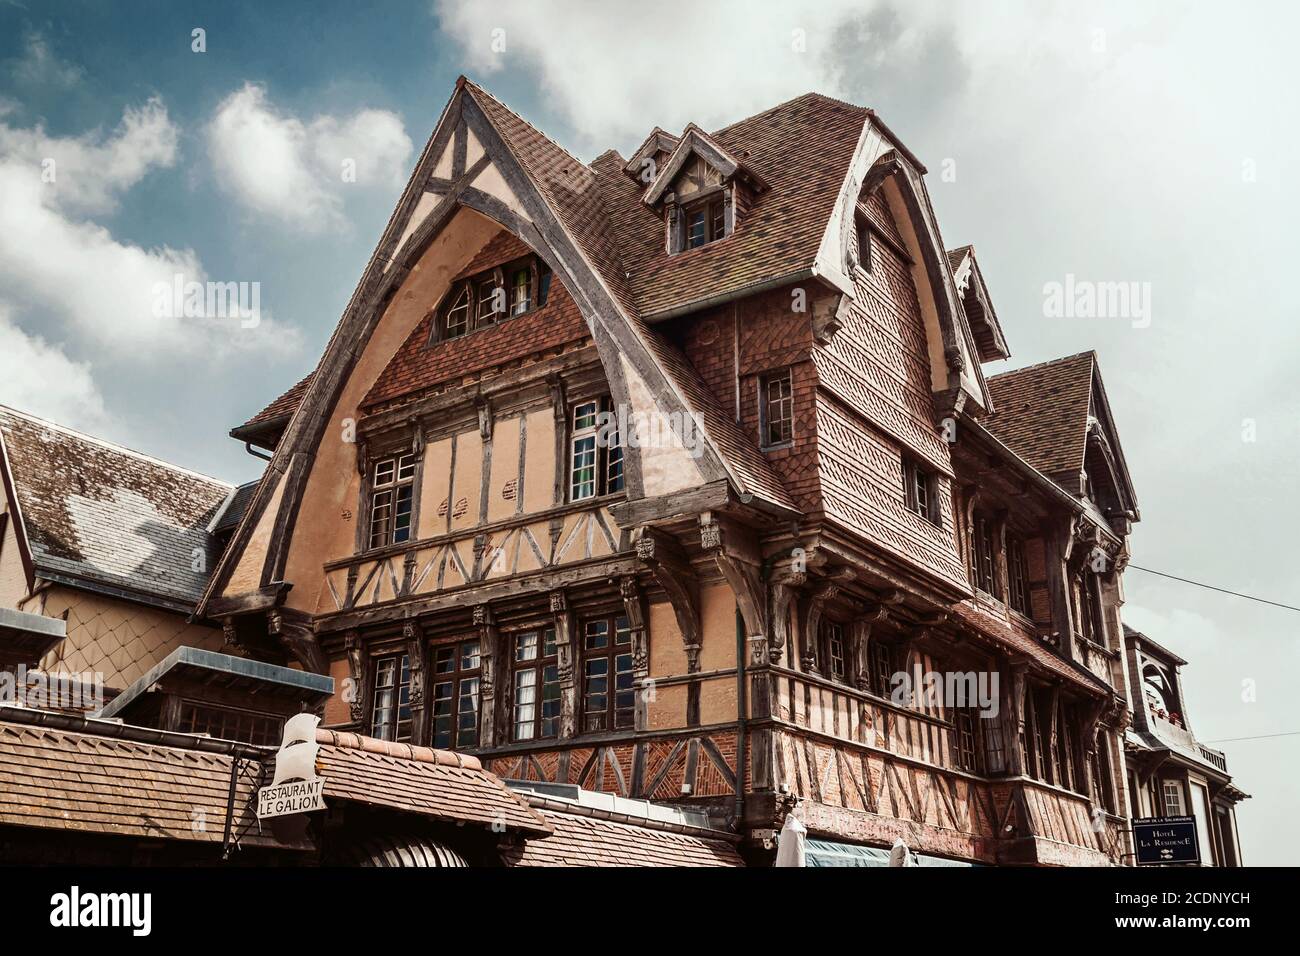 View of the Manoir de la Salamandre, a historic, lordly Tudor style house in Etretat, Normandy Stock Photo